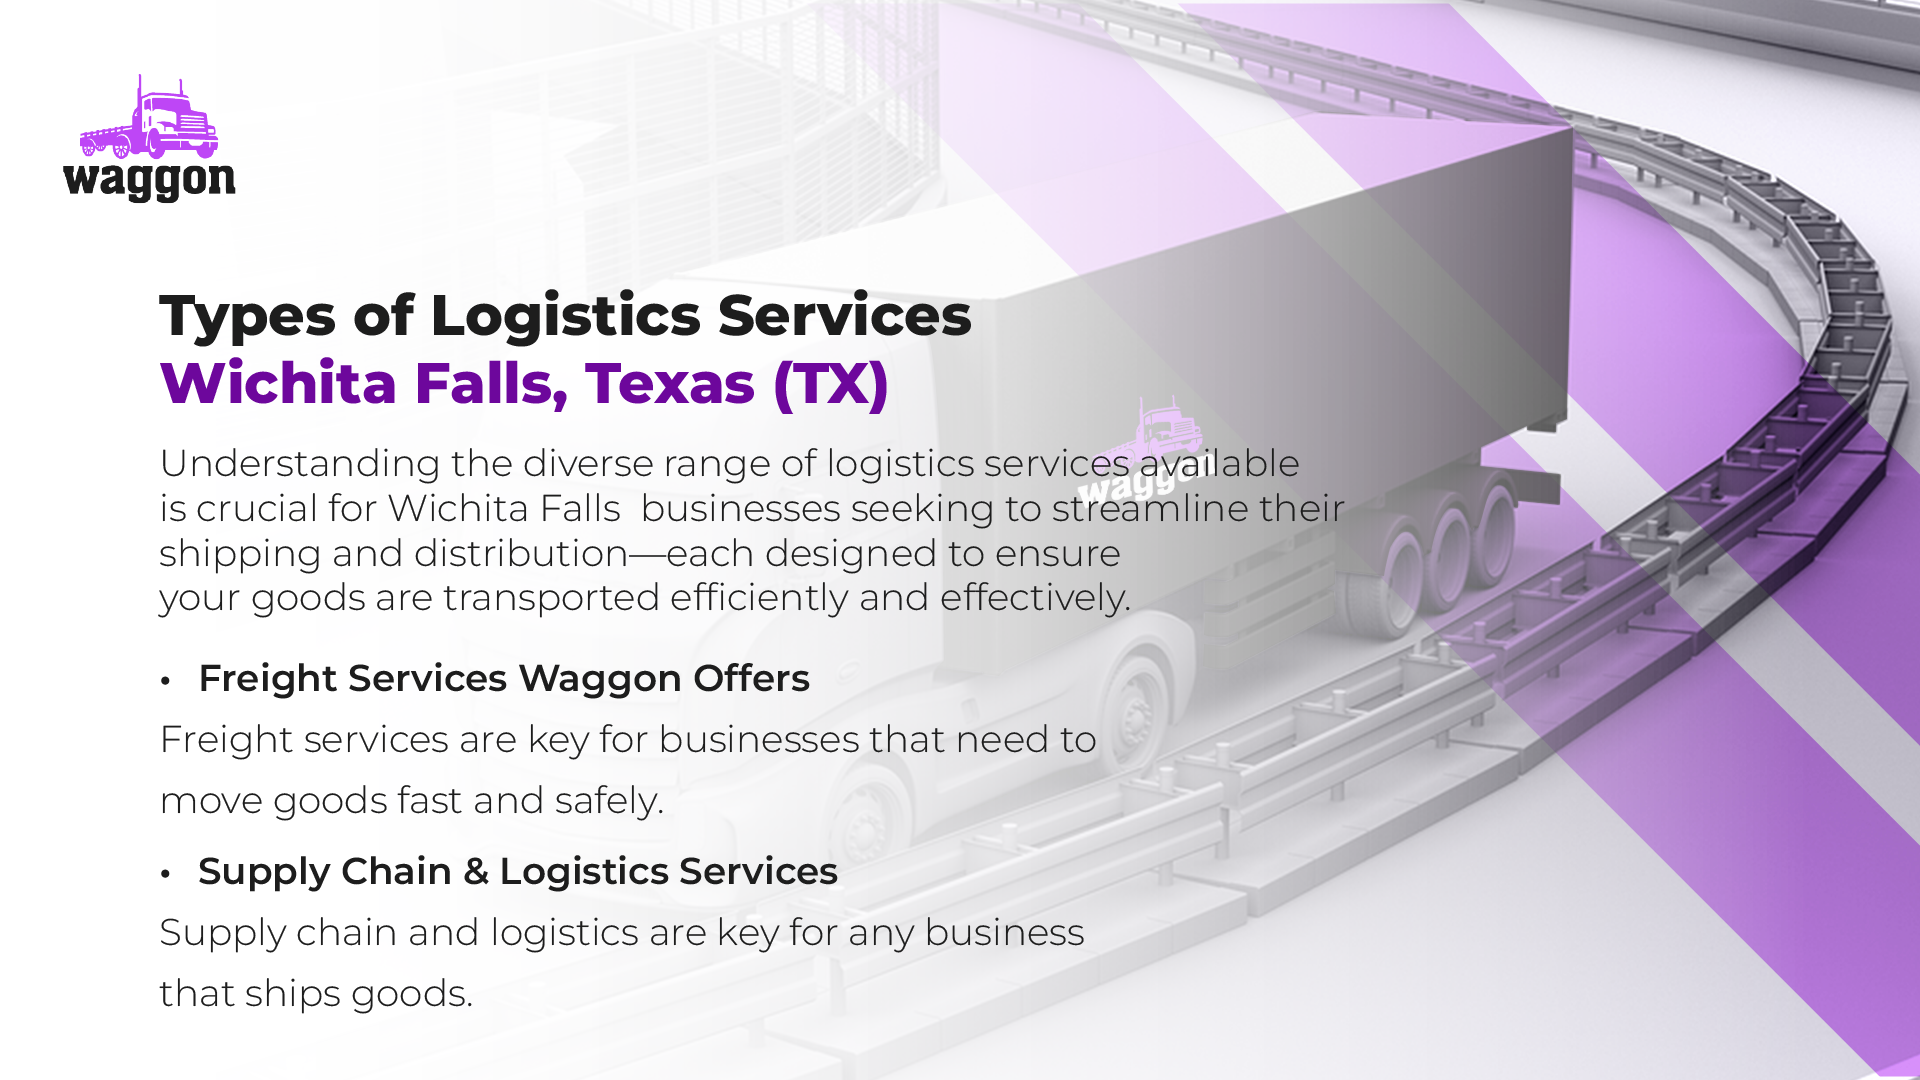 Types of Logistics Services in Wichita Falls, Texas (TX)